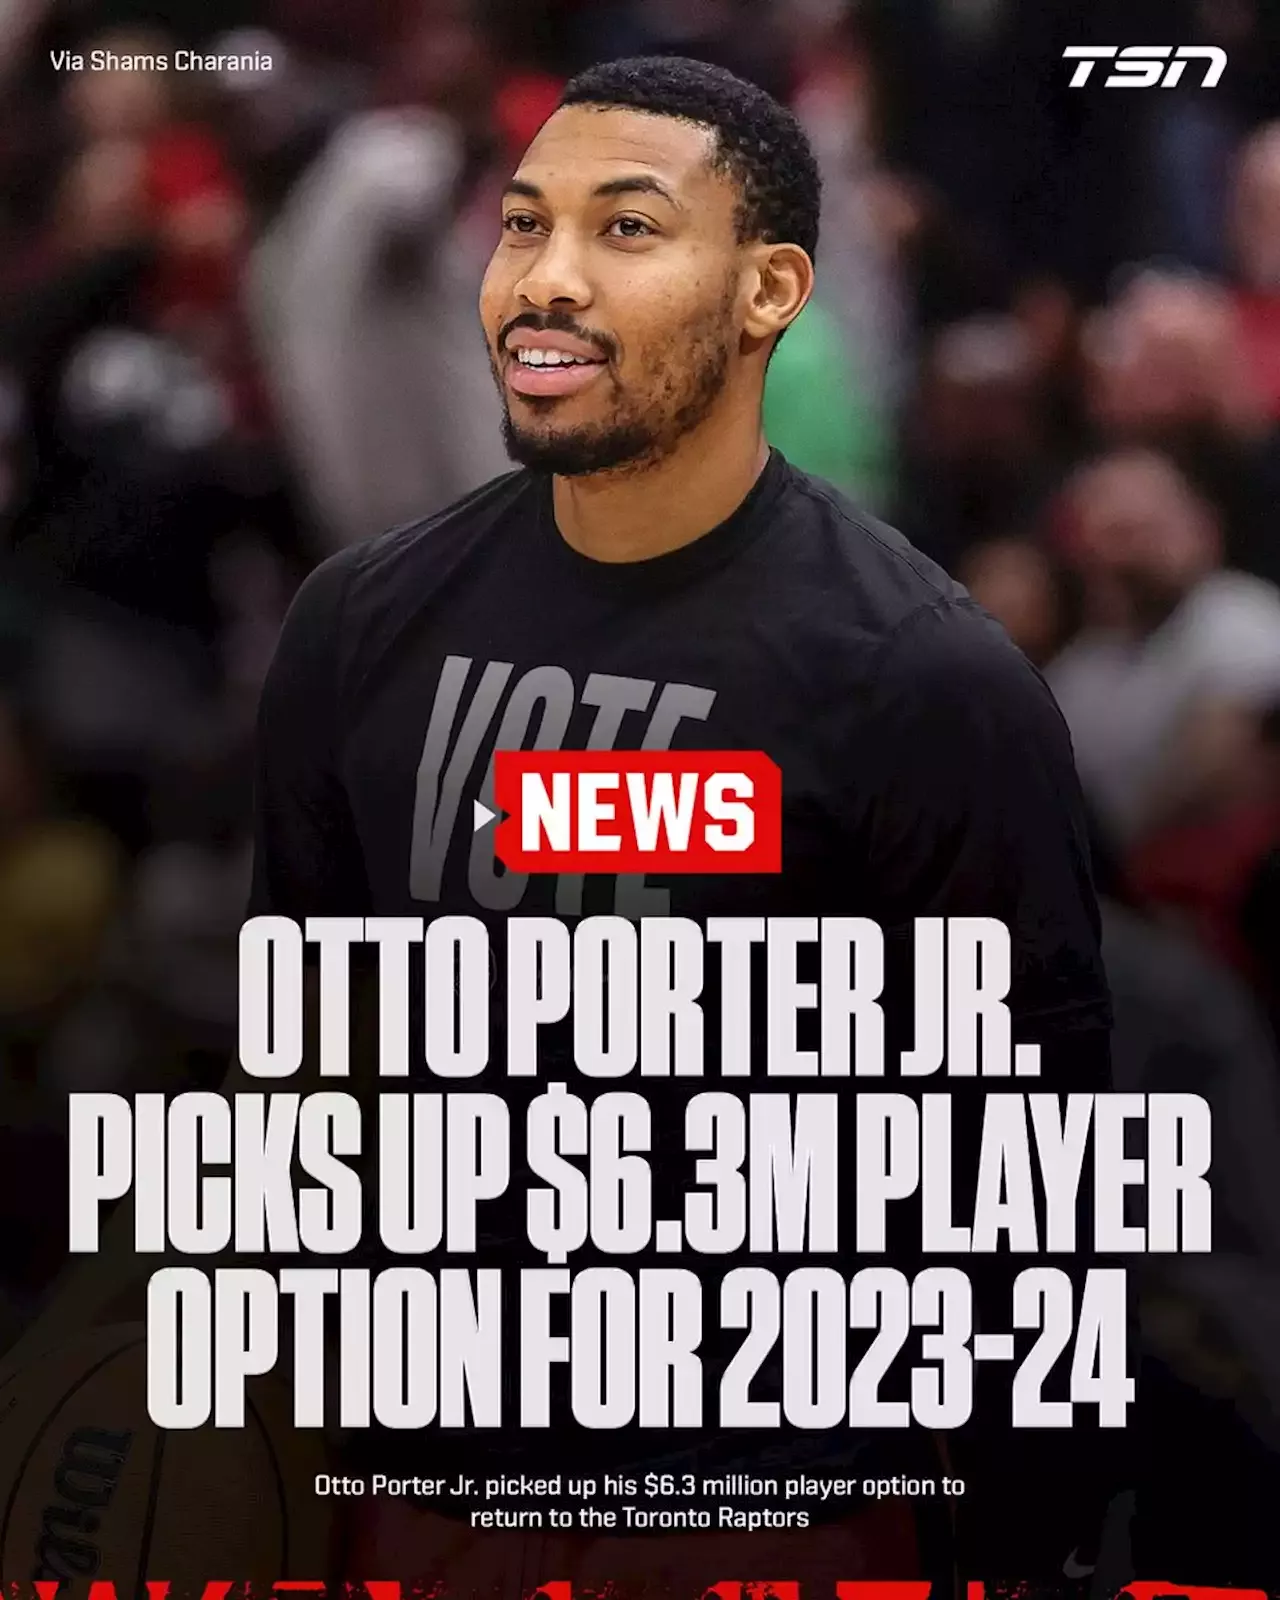 Toronto Raptors forward Otto Porter Jr. picks up player option for 2023